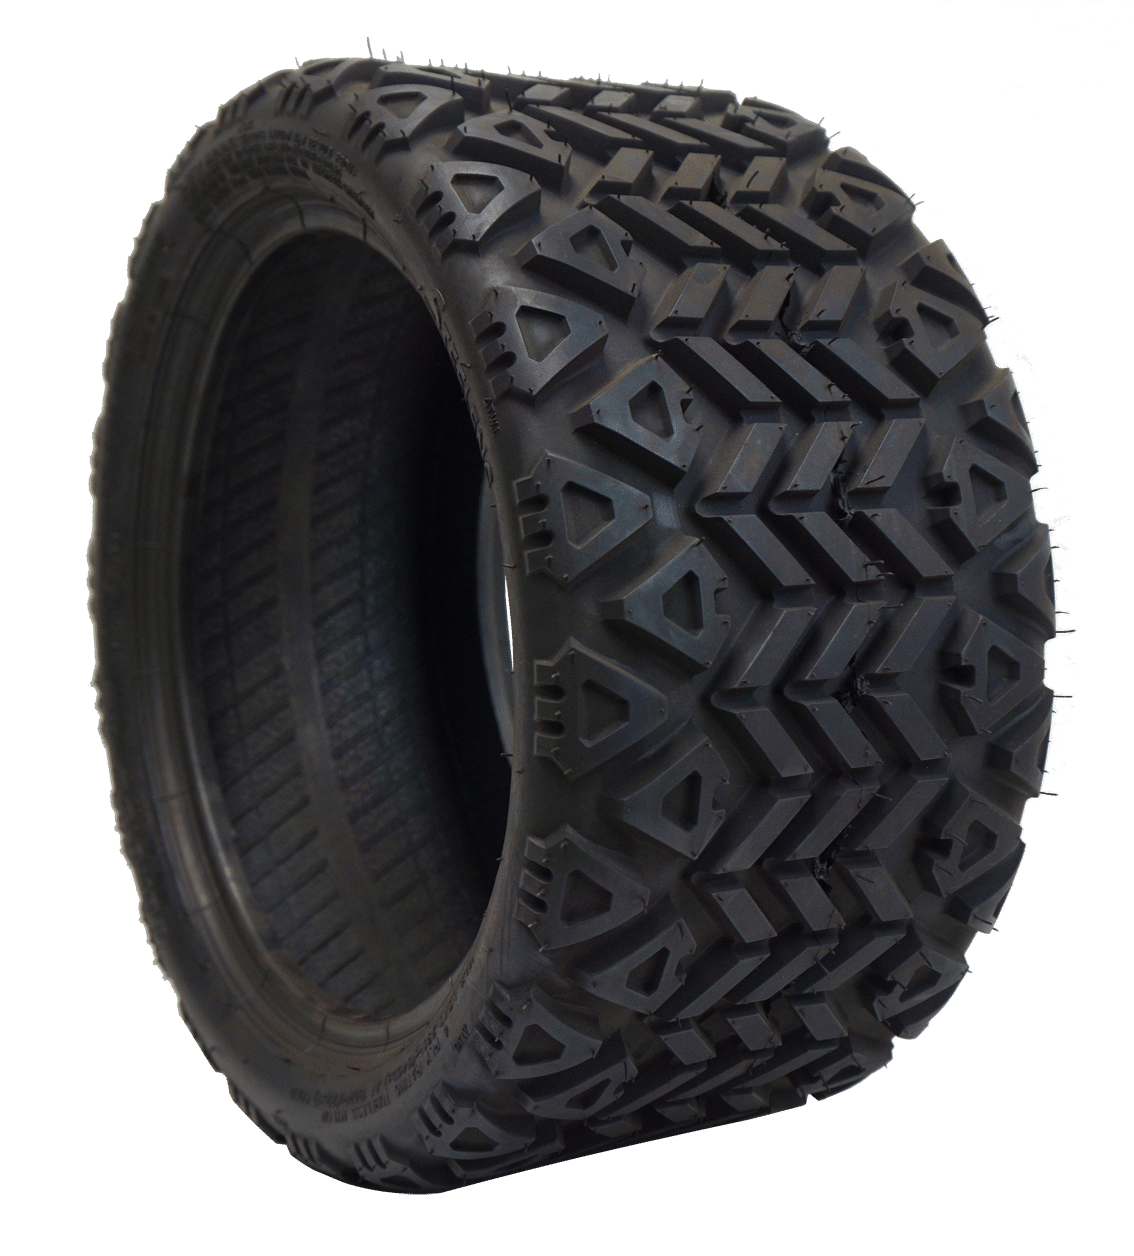 TR1208 – STEELENG 18″x8.5″-12″ All-Terrain Tire DOT approved